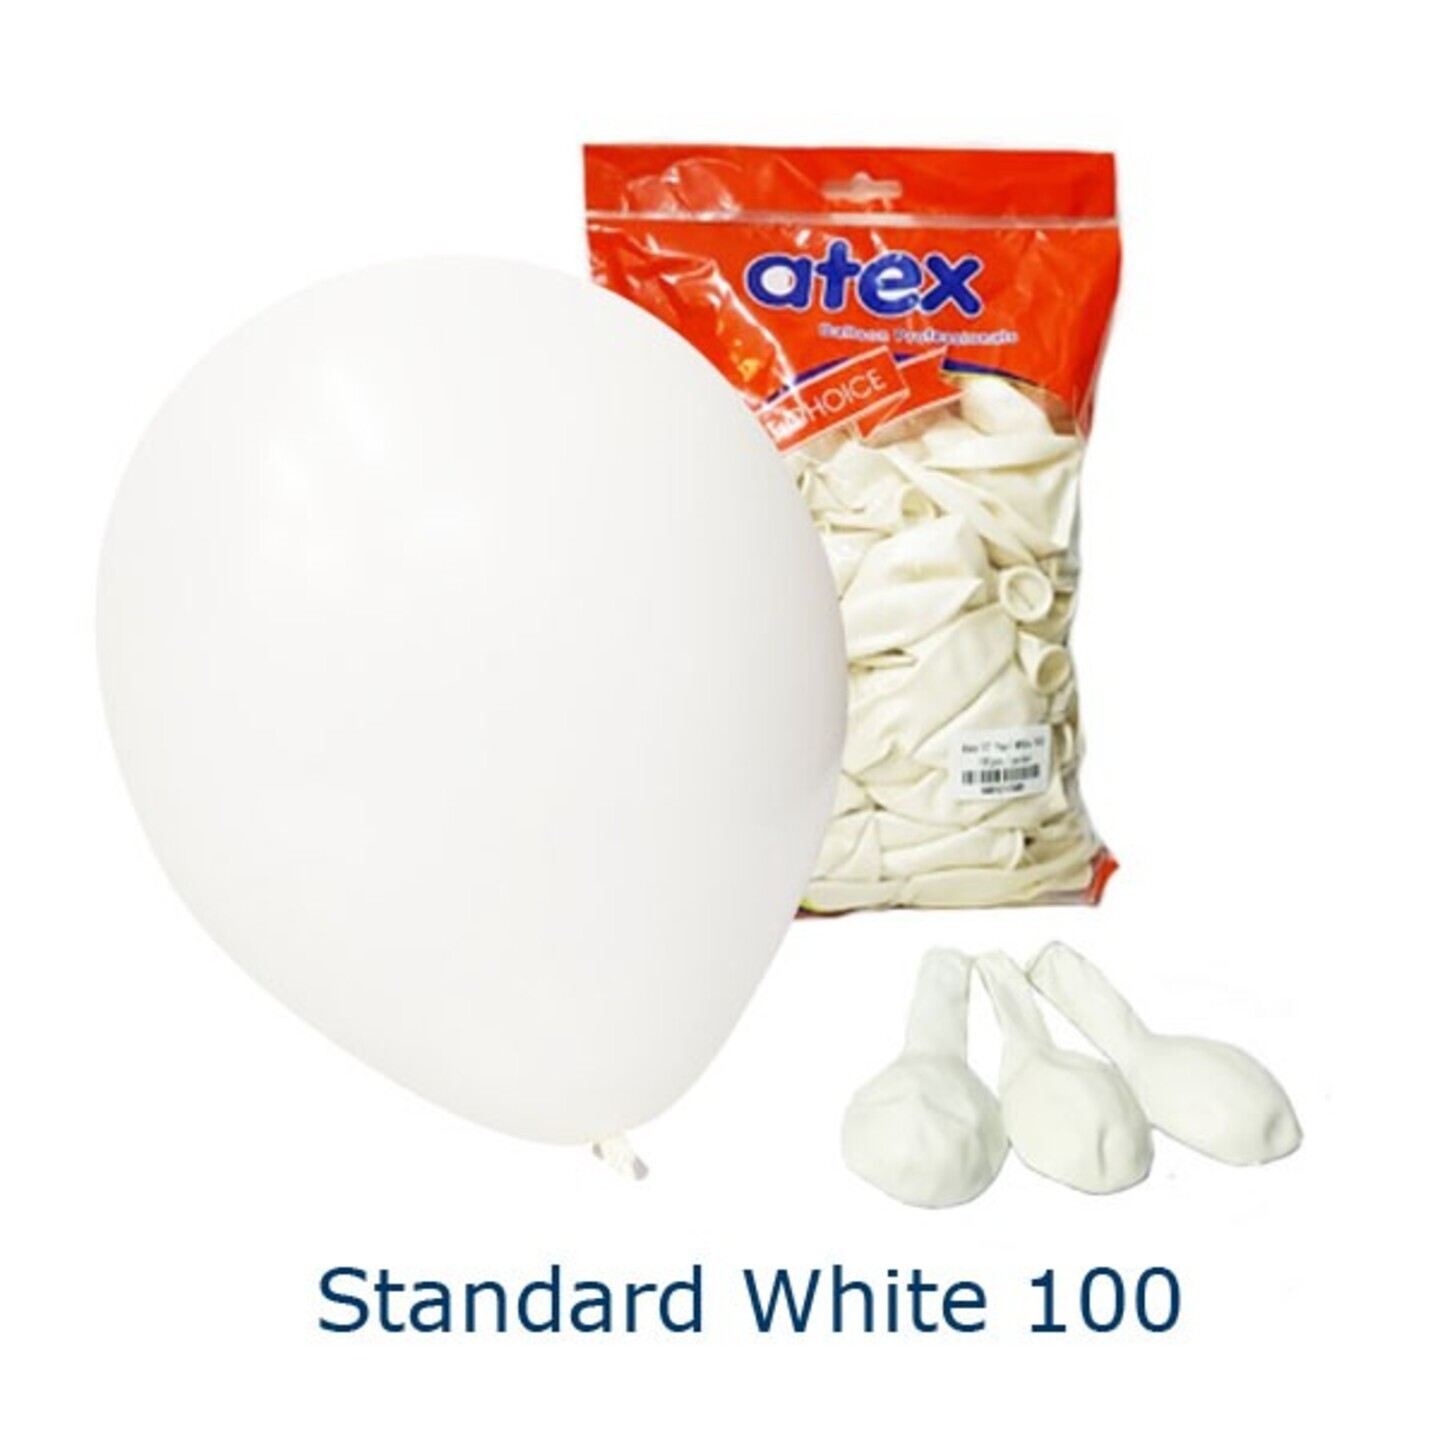 Standard White 100